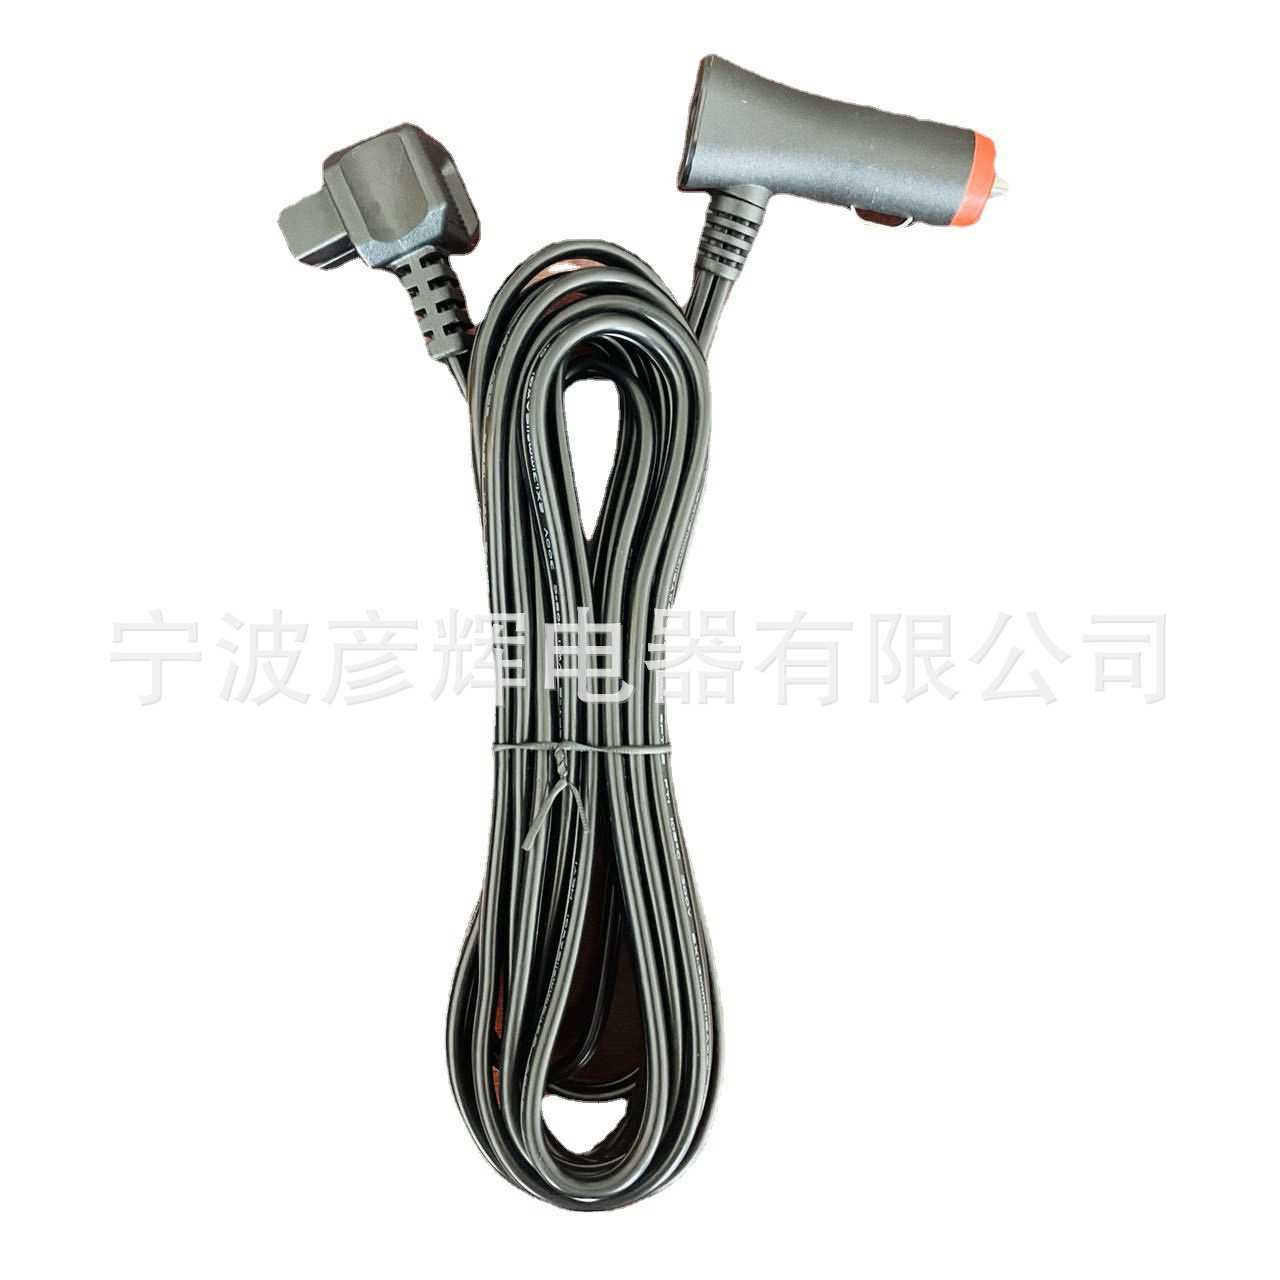  Ningbo Yanhui Electrical Appliance Co., Ltd